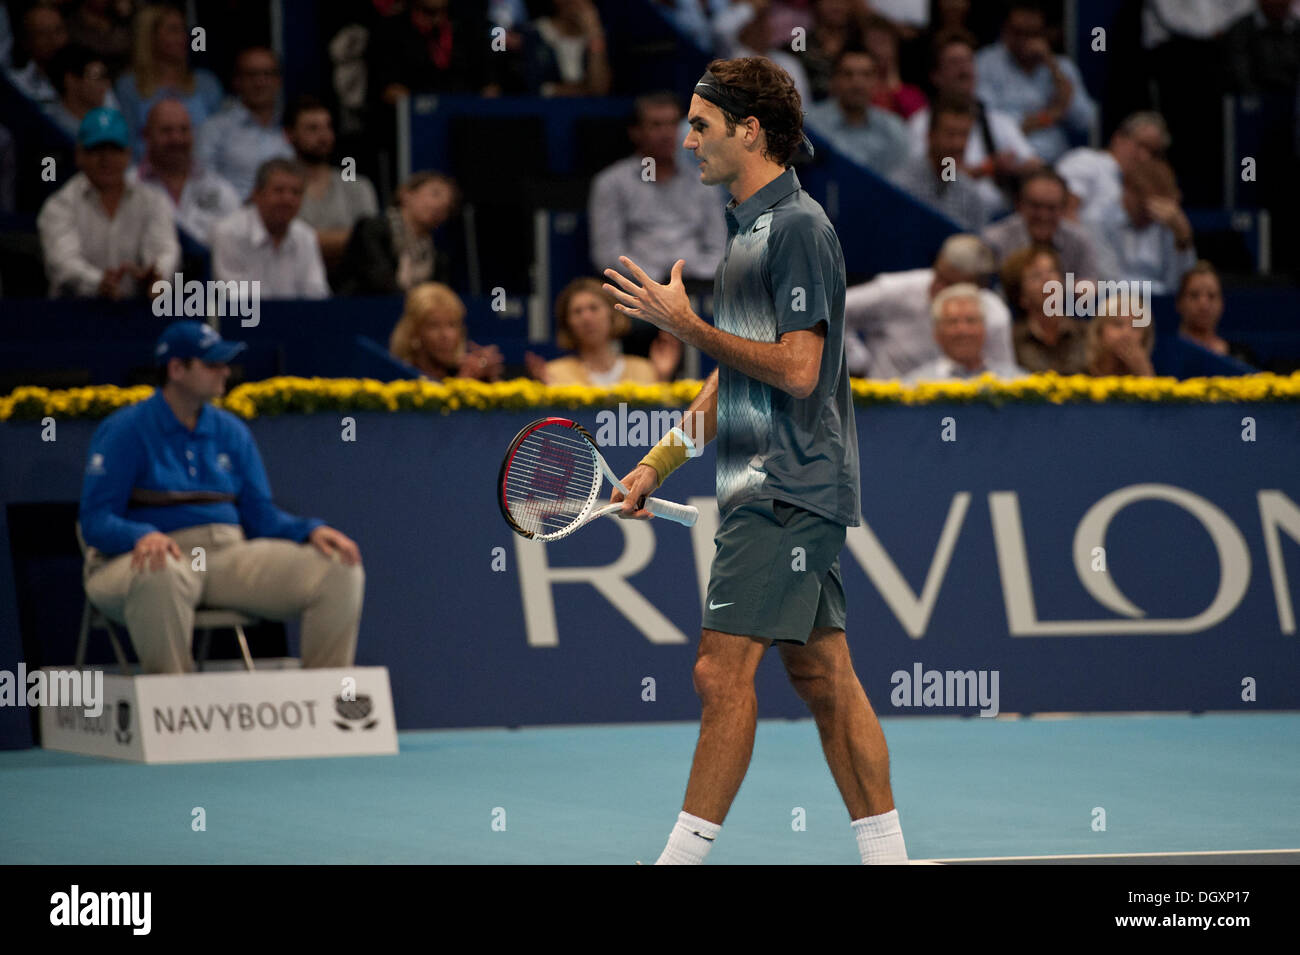 Basel, Svizzera. 27 ott 2013. Roger Federer (SUI) arrabbiato durante la finale di Swiss interni a St. Jakobshalle di domenica. Foto: Miroslav Dakov/ Alamy Live News Foto Stock